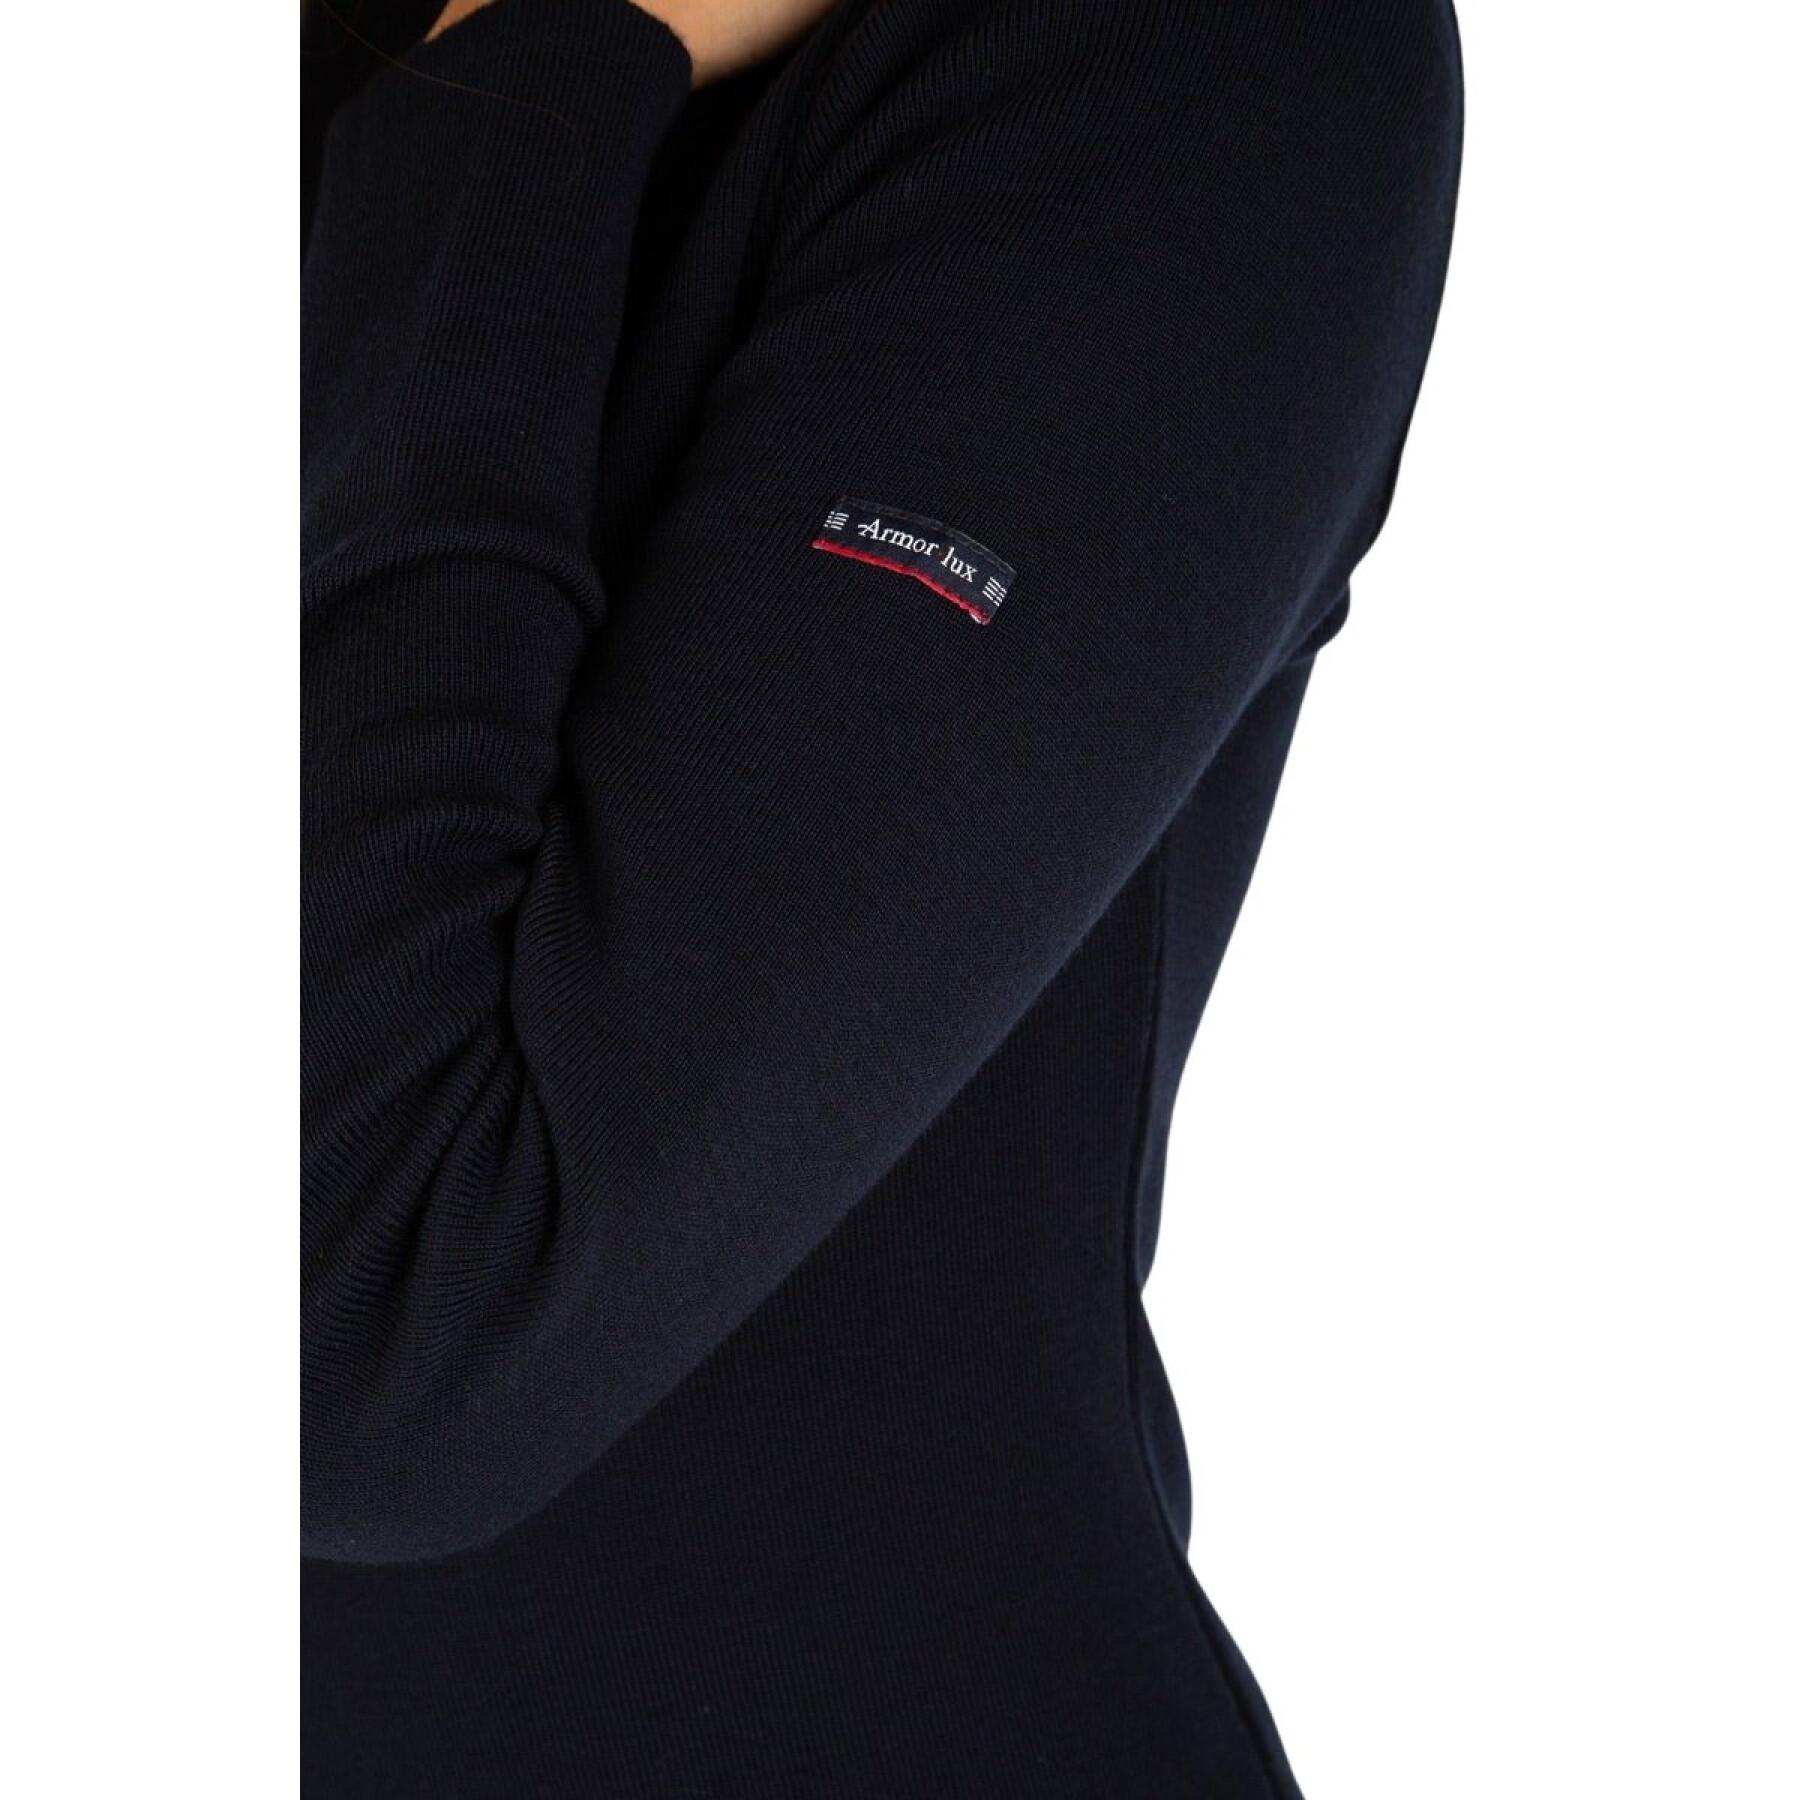 Women's sweater Armor-Lux Briac